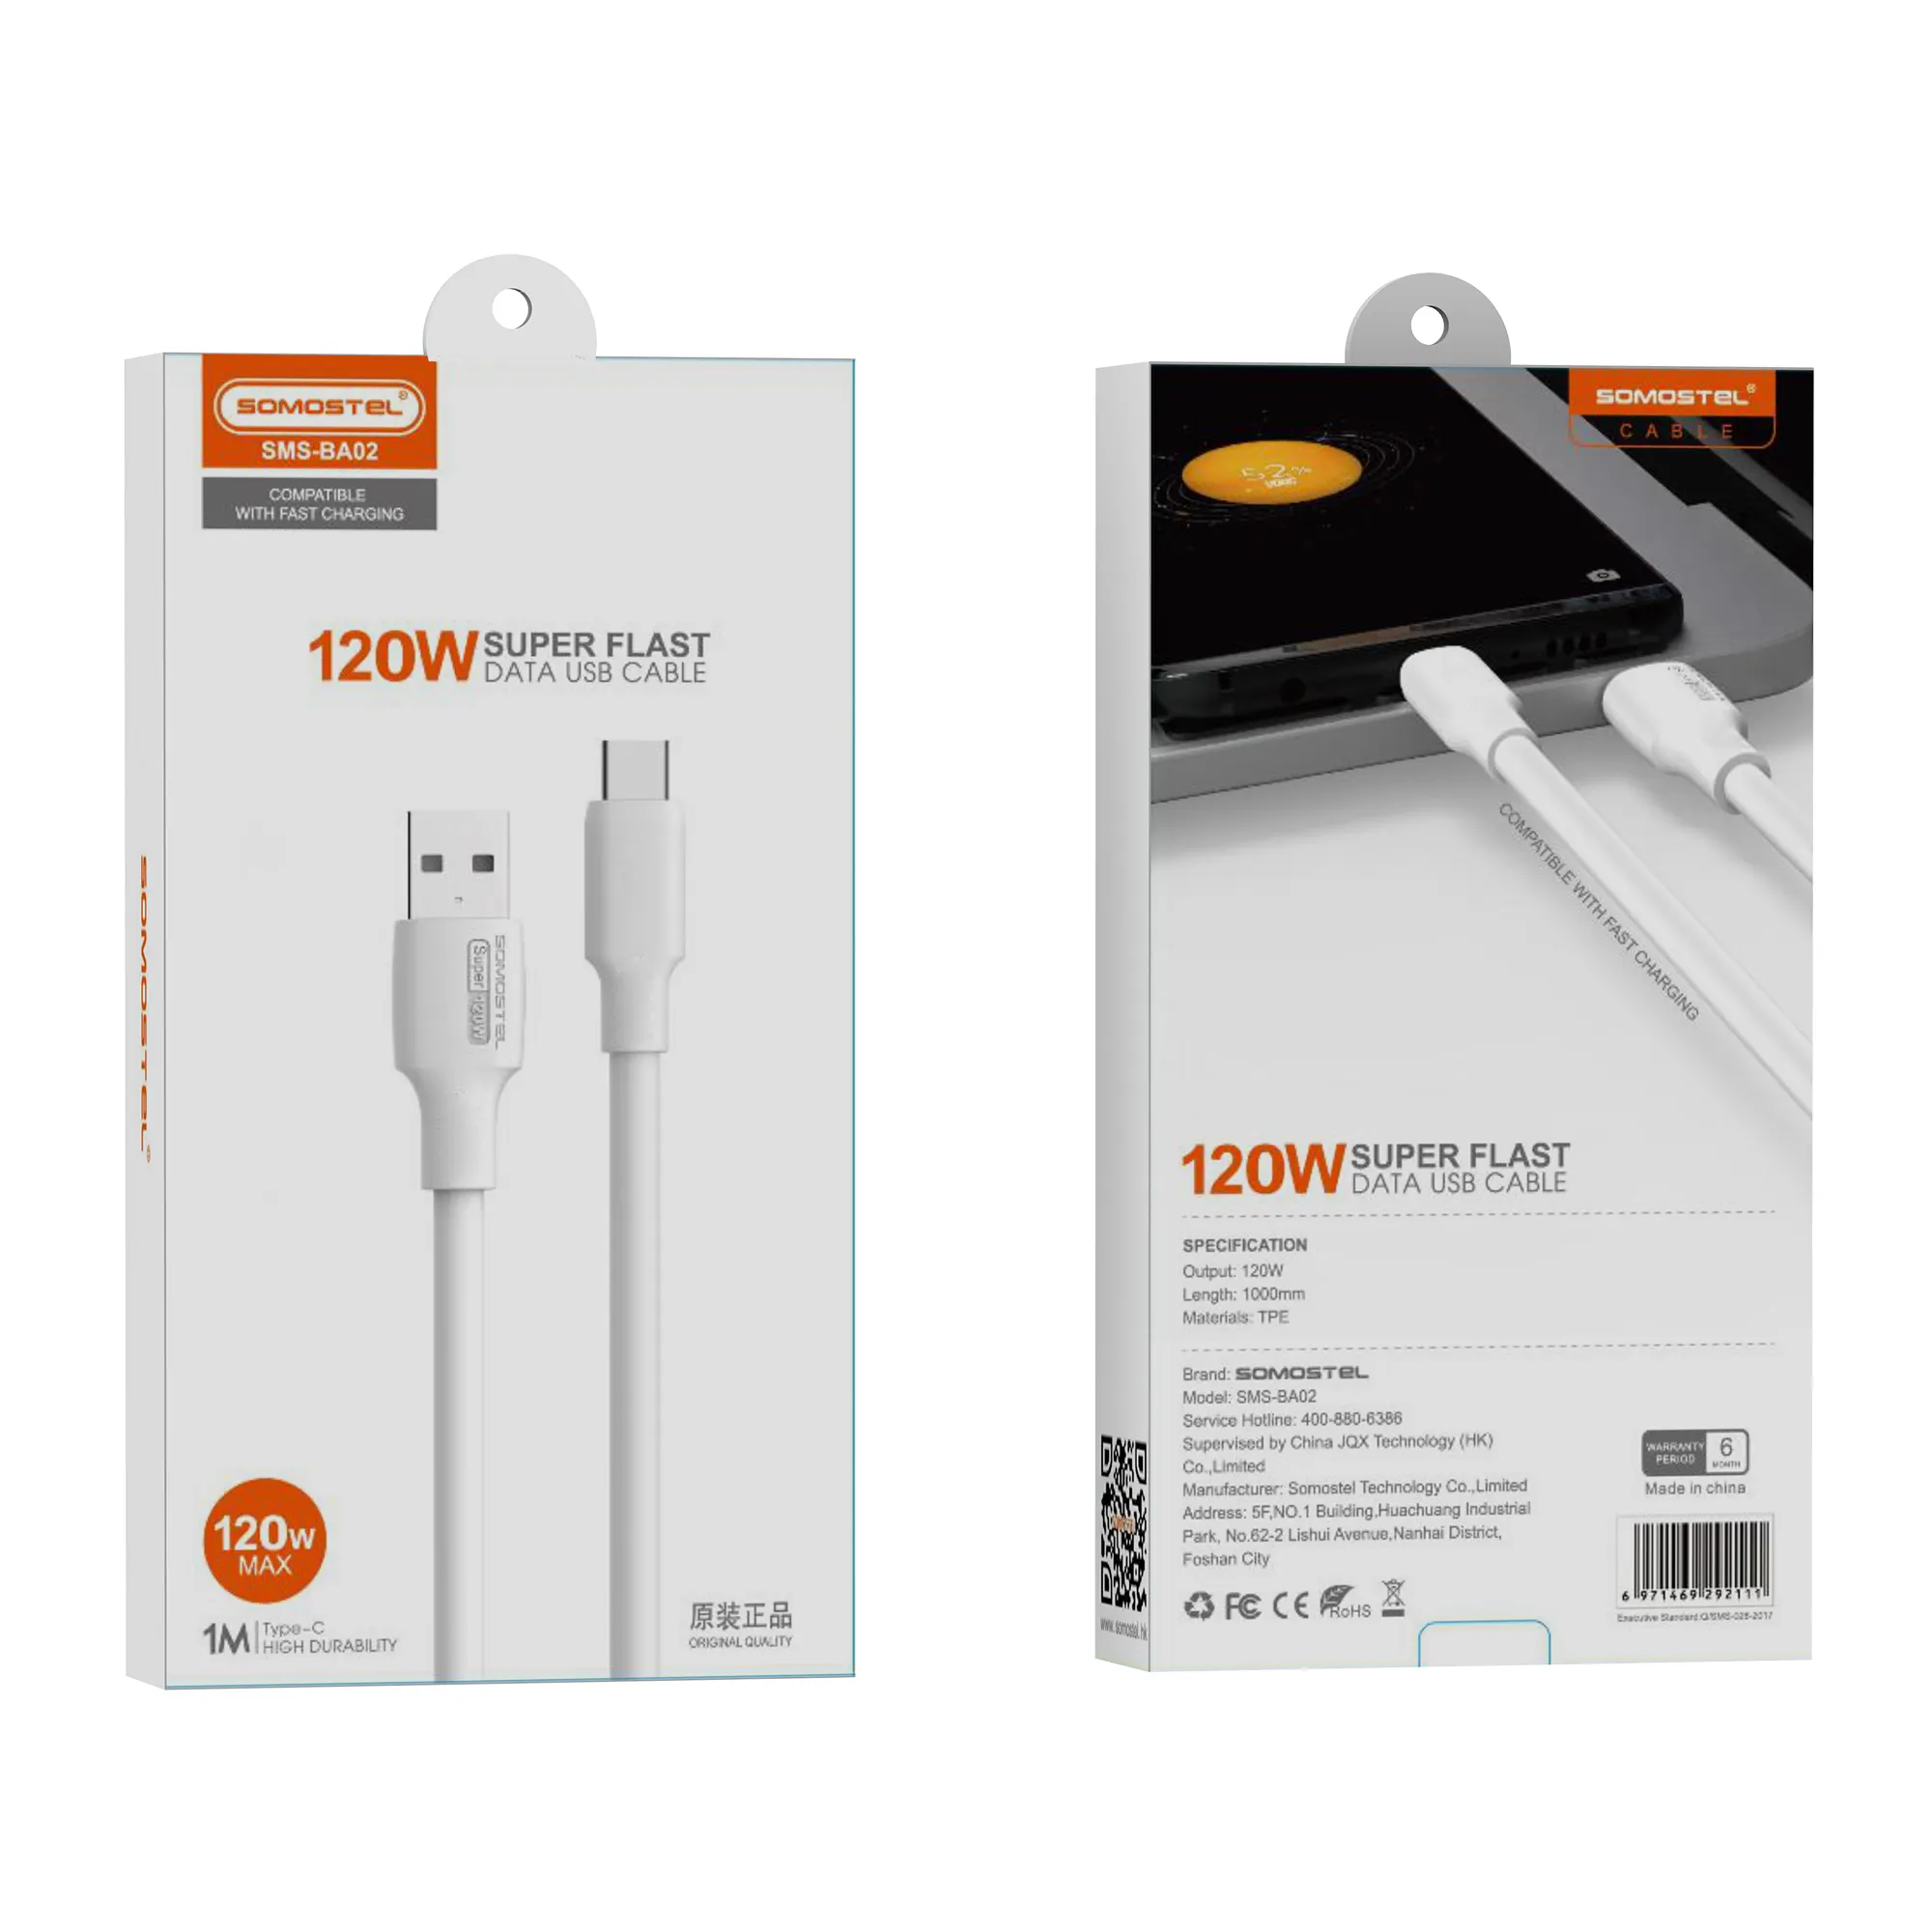 SOMOSTEL kabel USB tipe-c fleksibel, kabel TPE SMS-BA02 120W pengisian daya Super cepat teccologio Cavo Ricarica untuk Tablet